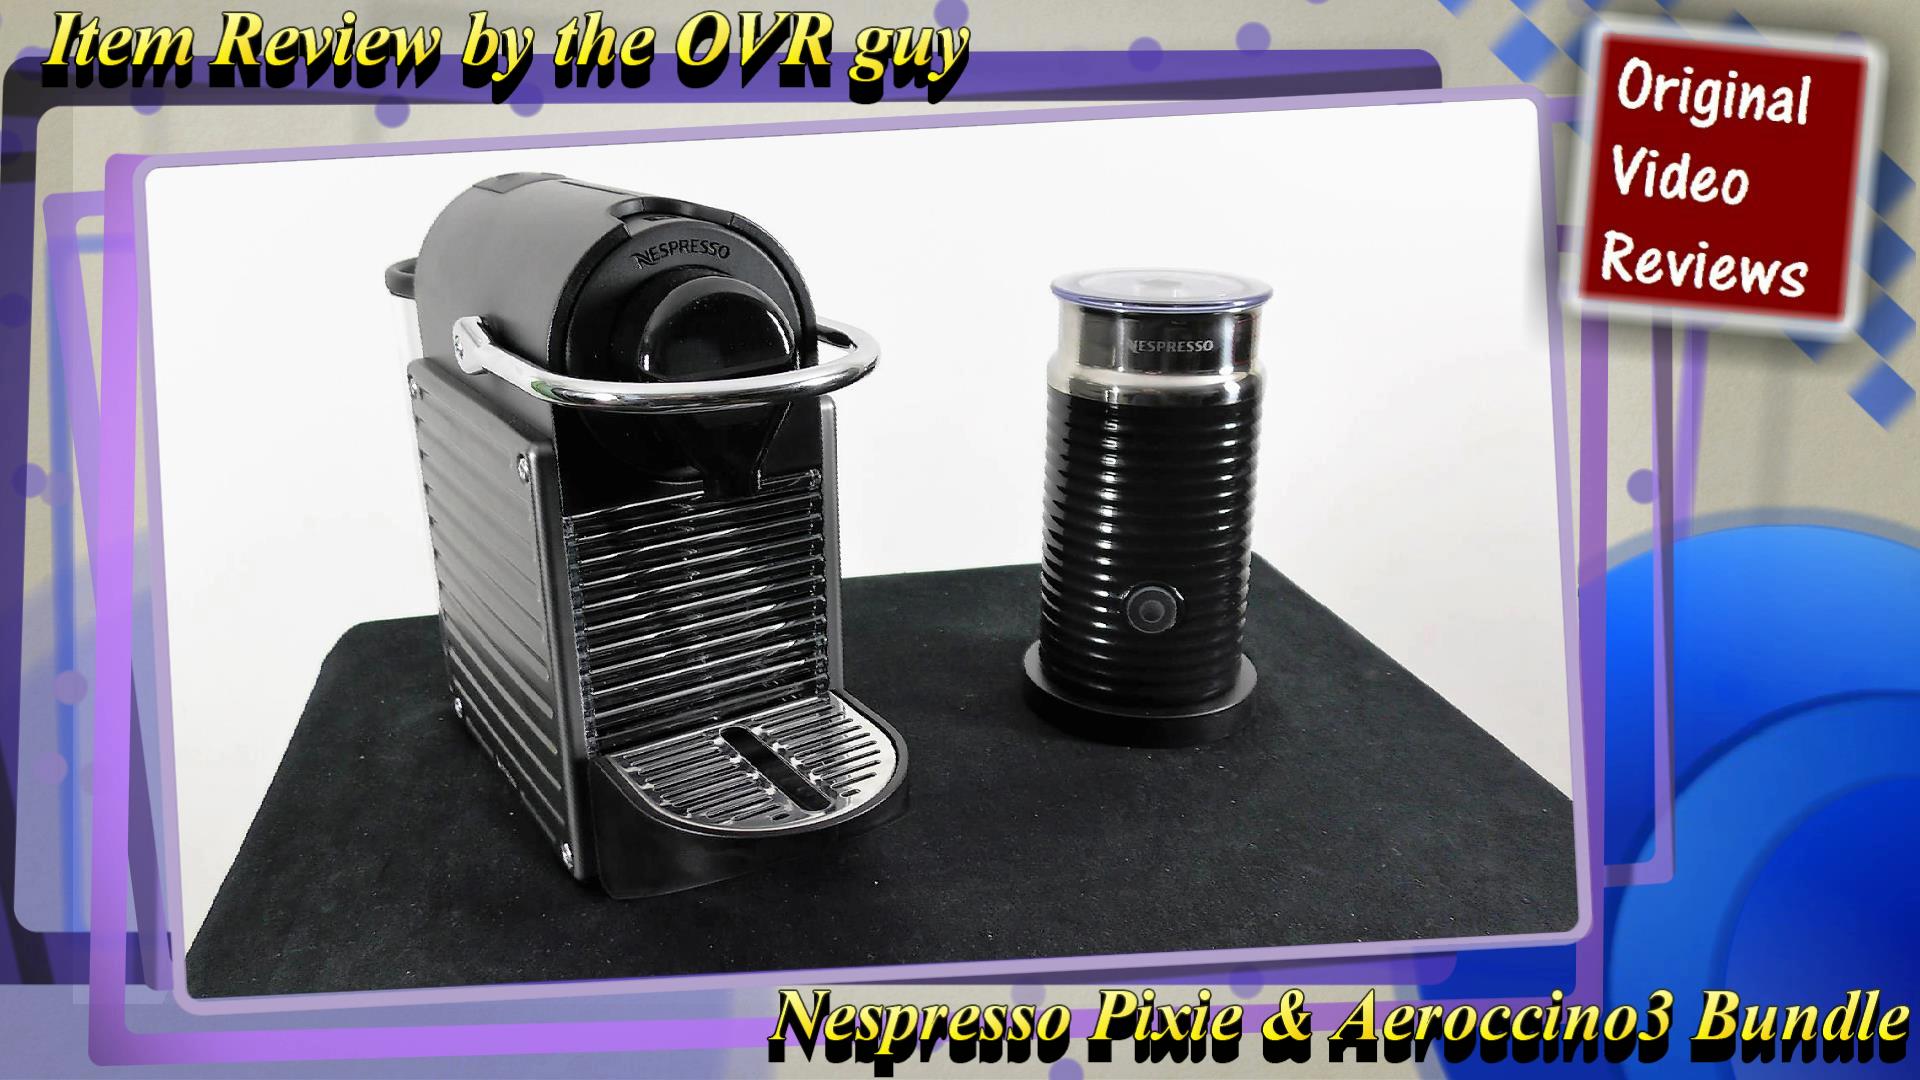 Nespresso Pixie Espresso Machine & Aeroccino3 Milk Frother Bundle Review (Thumbnail)